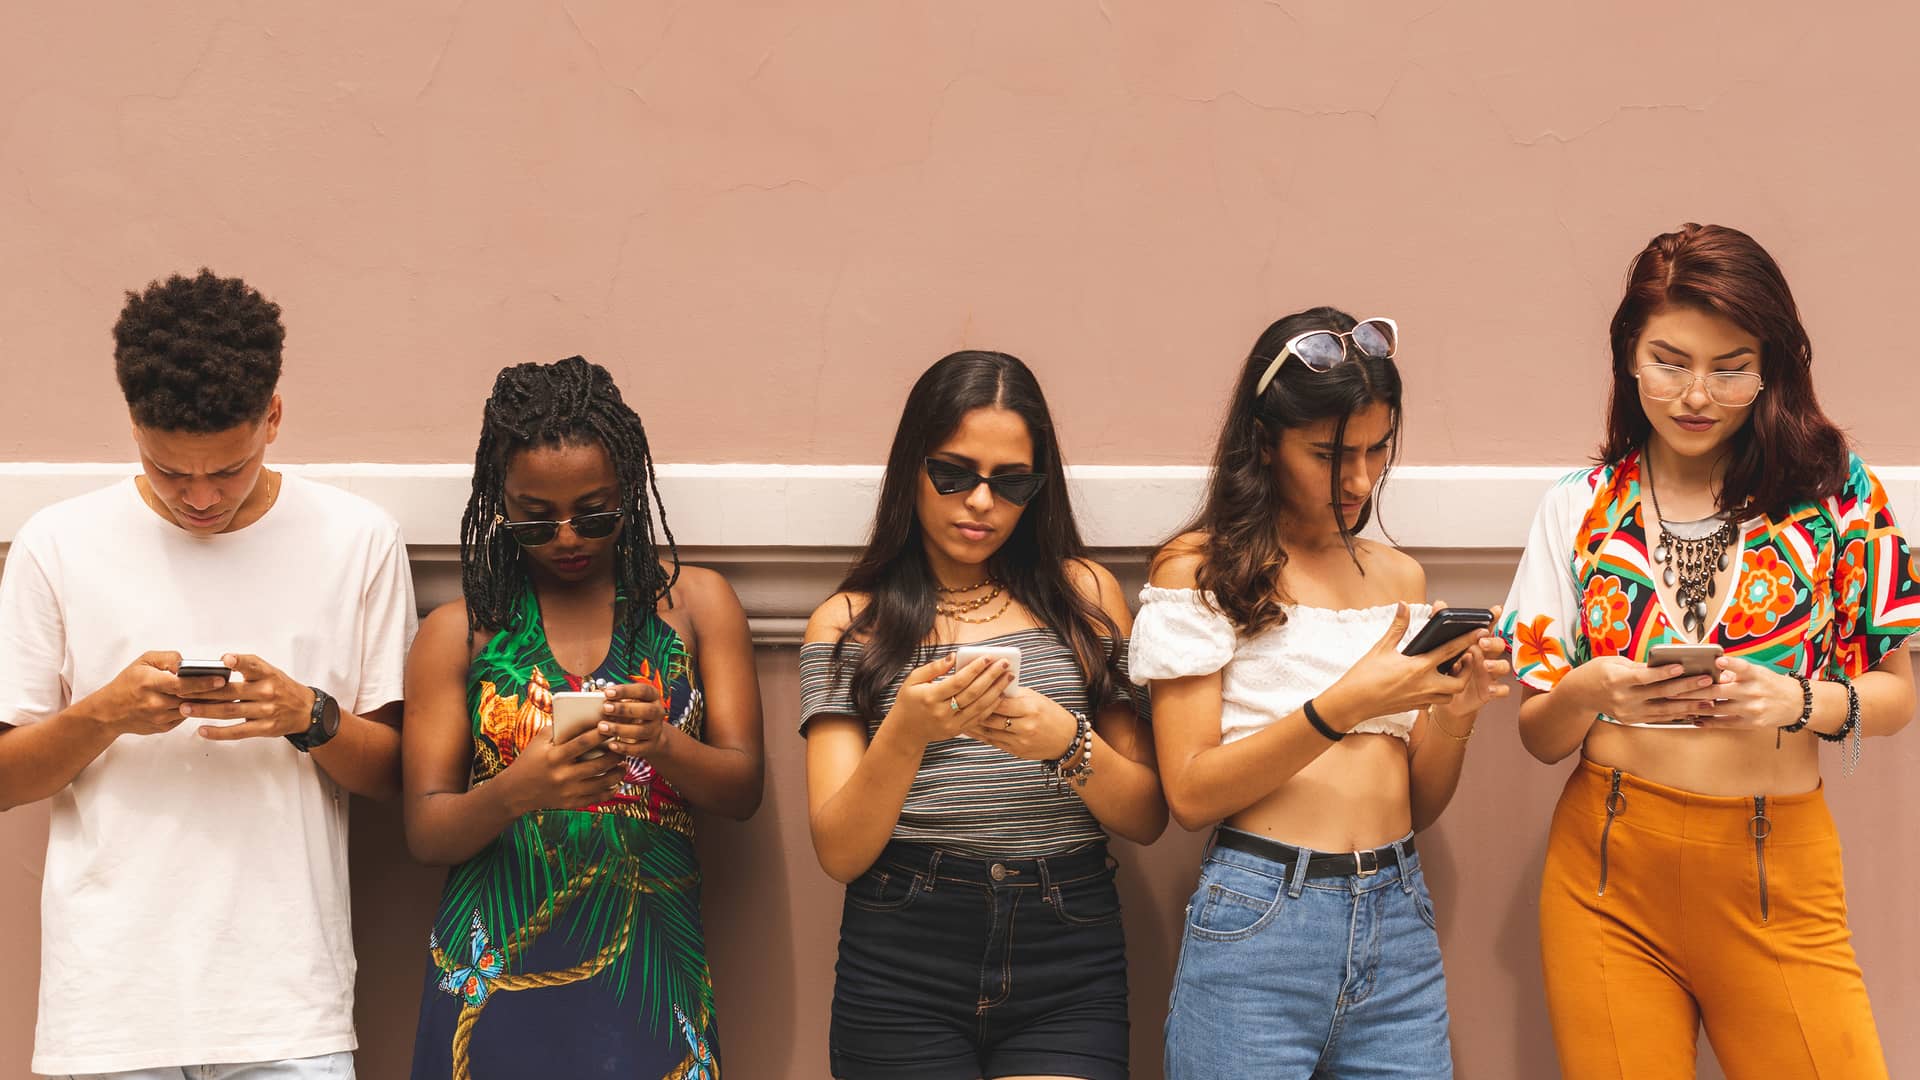 Jovenes usando sus teléfonos móviles simbolizan internet móvil ilimitado